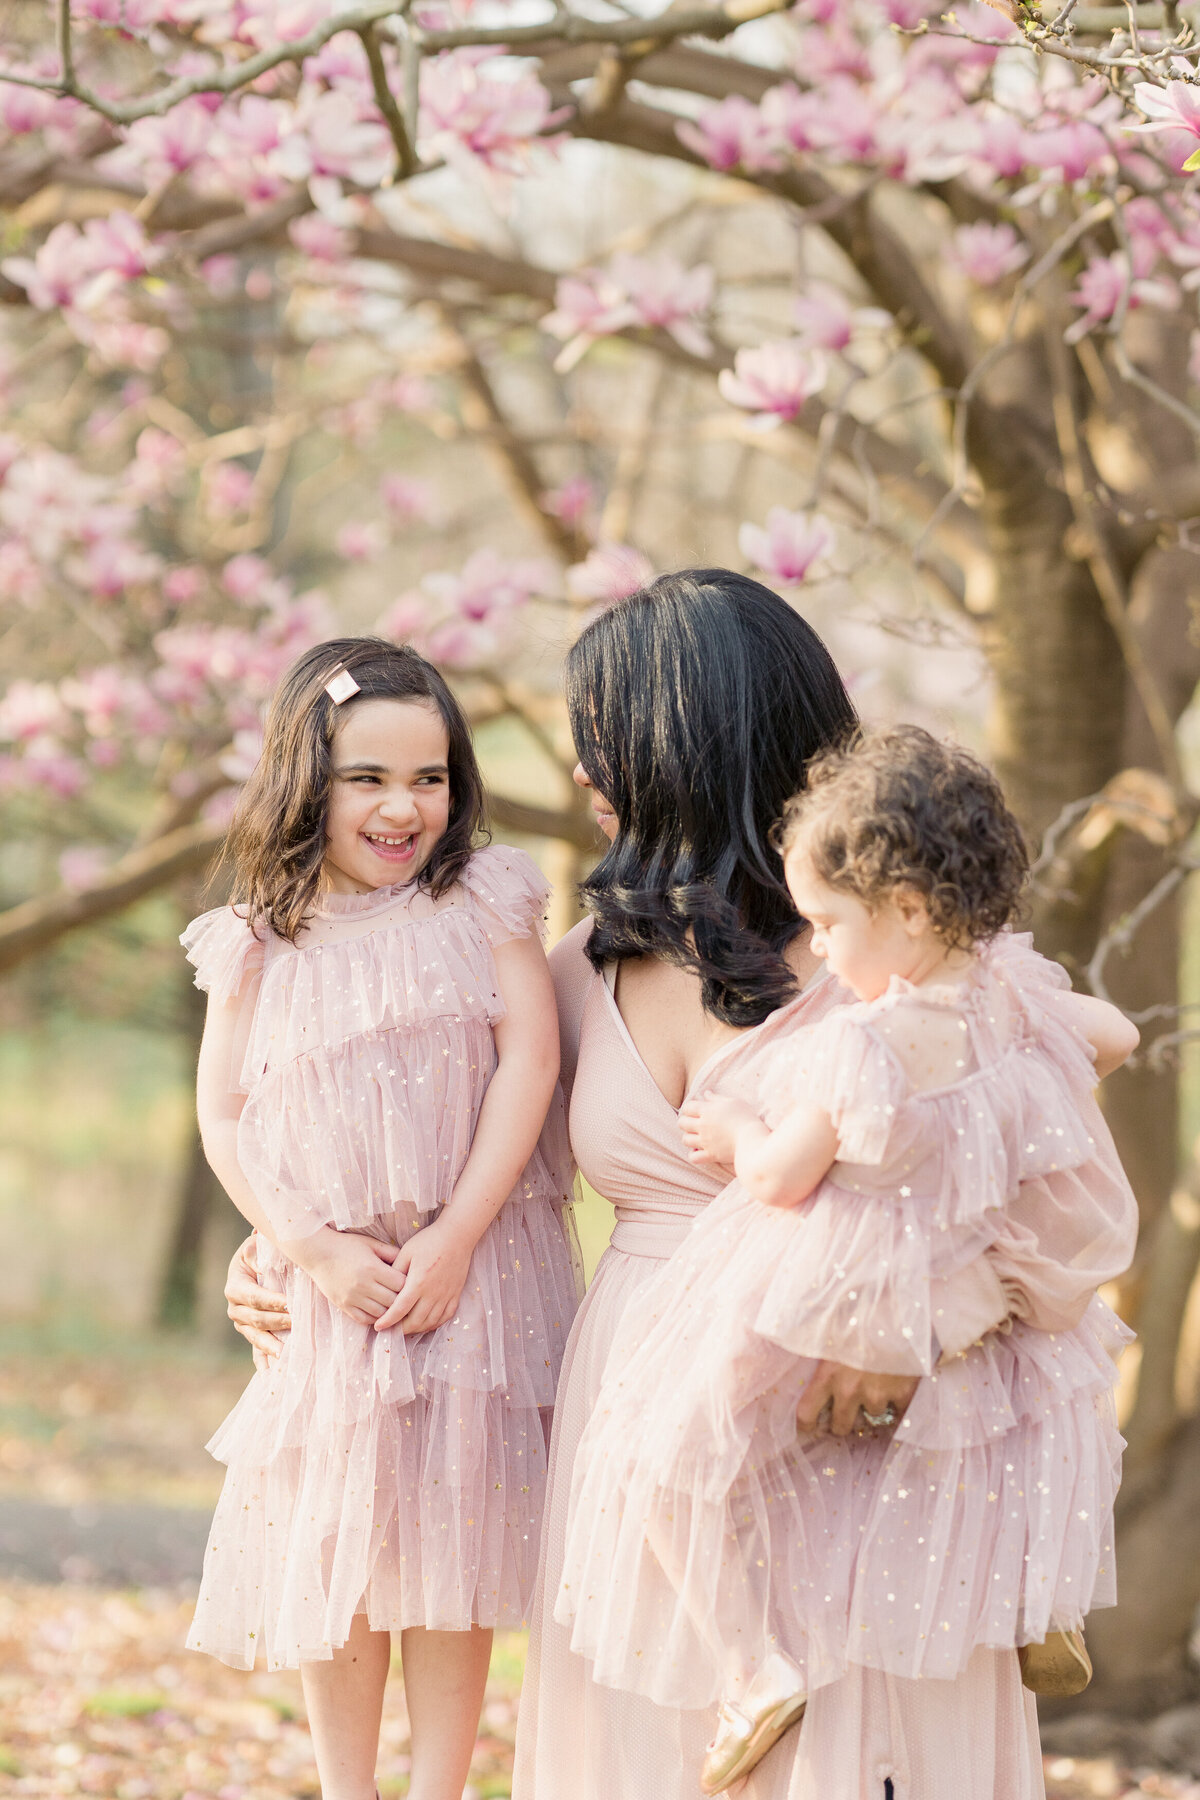 Courtney-Landrum-Photography-Motherhood-Cherry-Blossoms-2